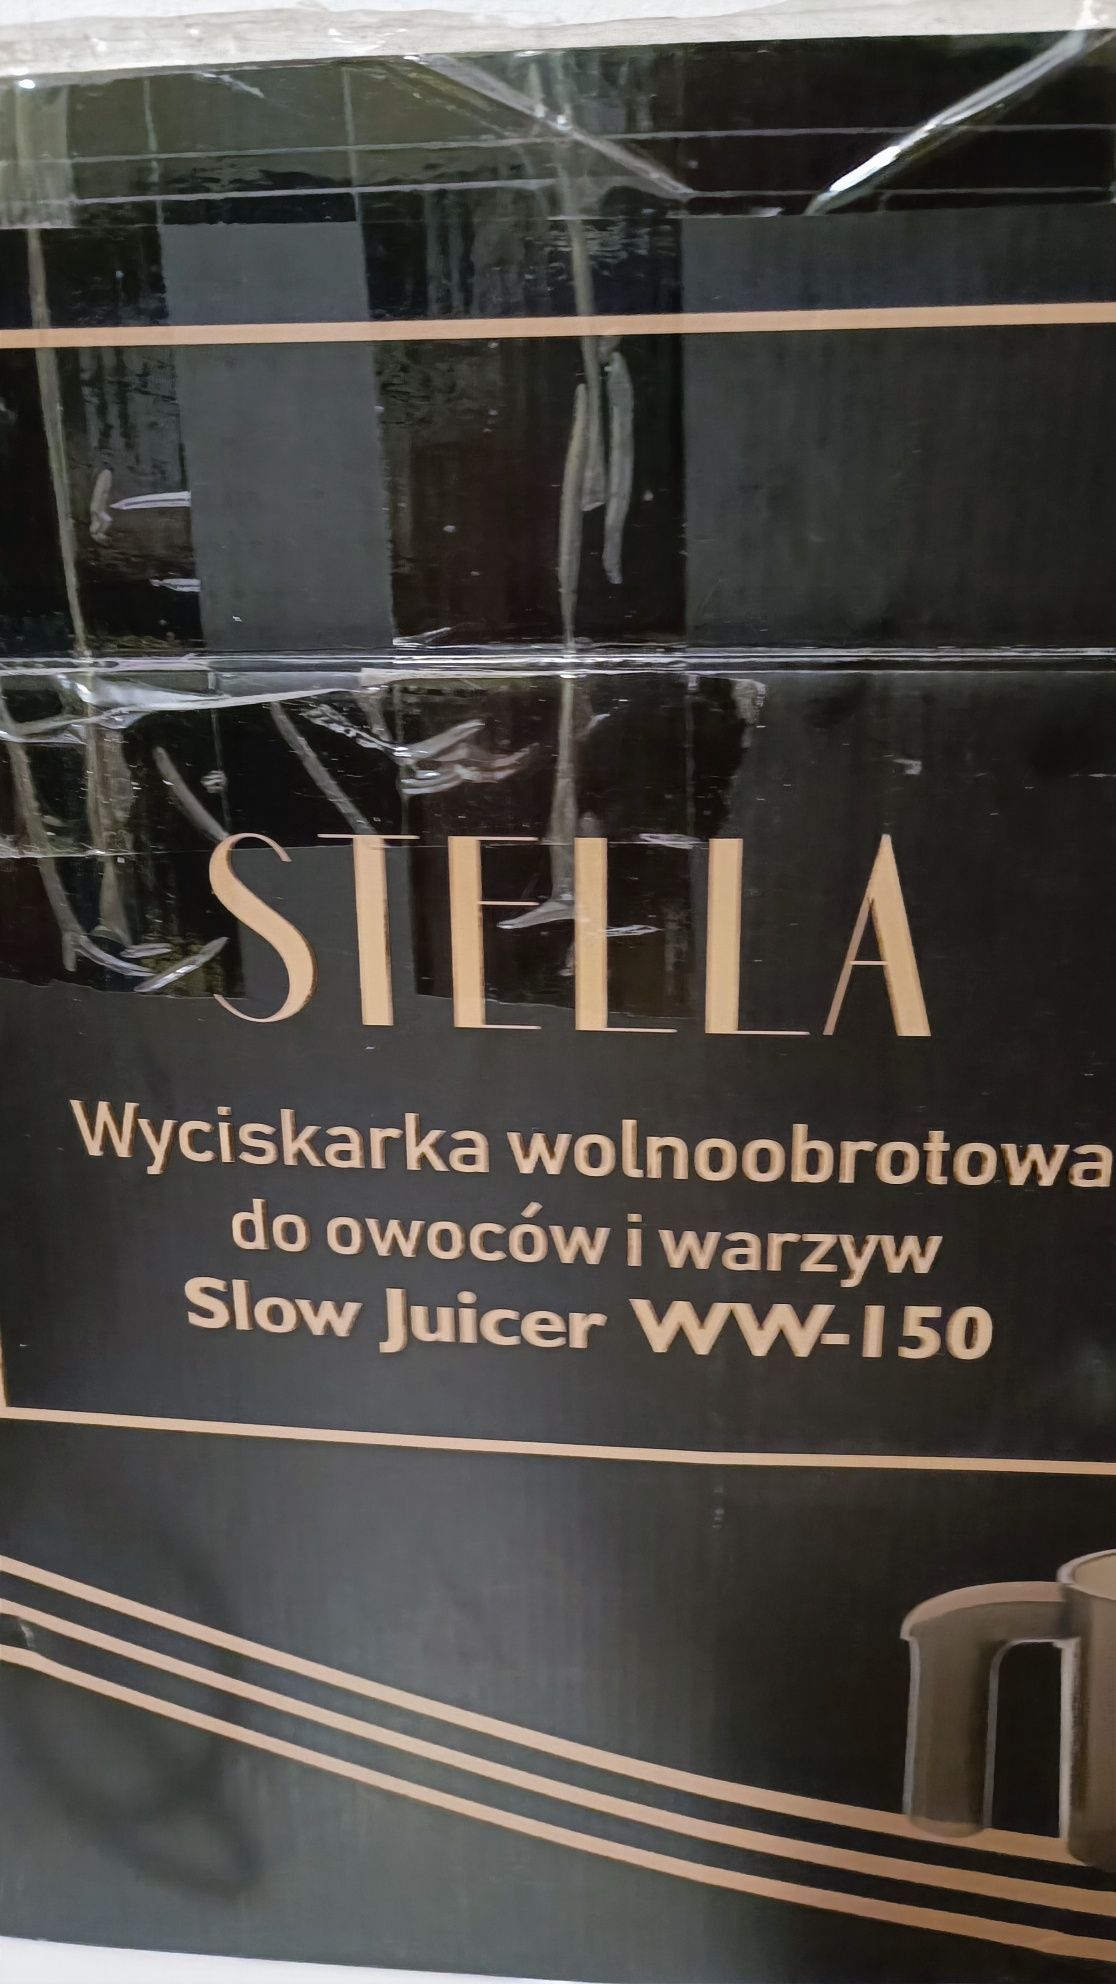 Sokowirówka wolnoobrotowa Stella